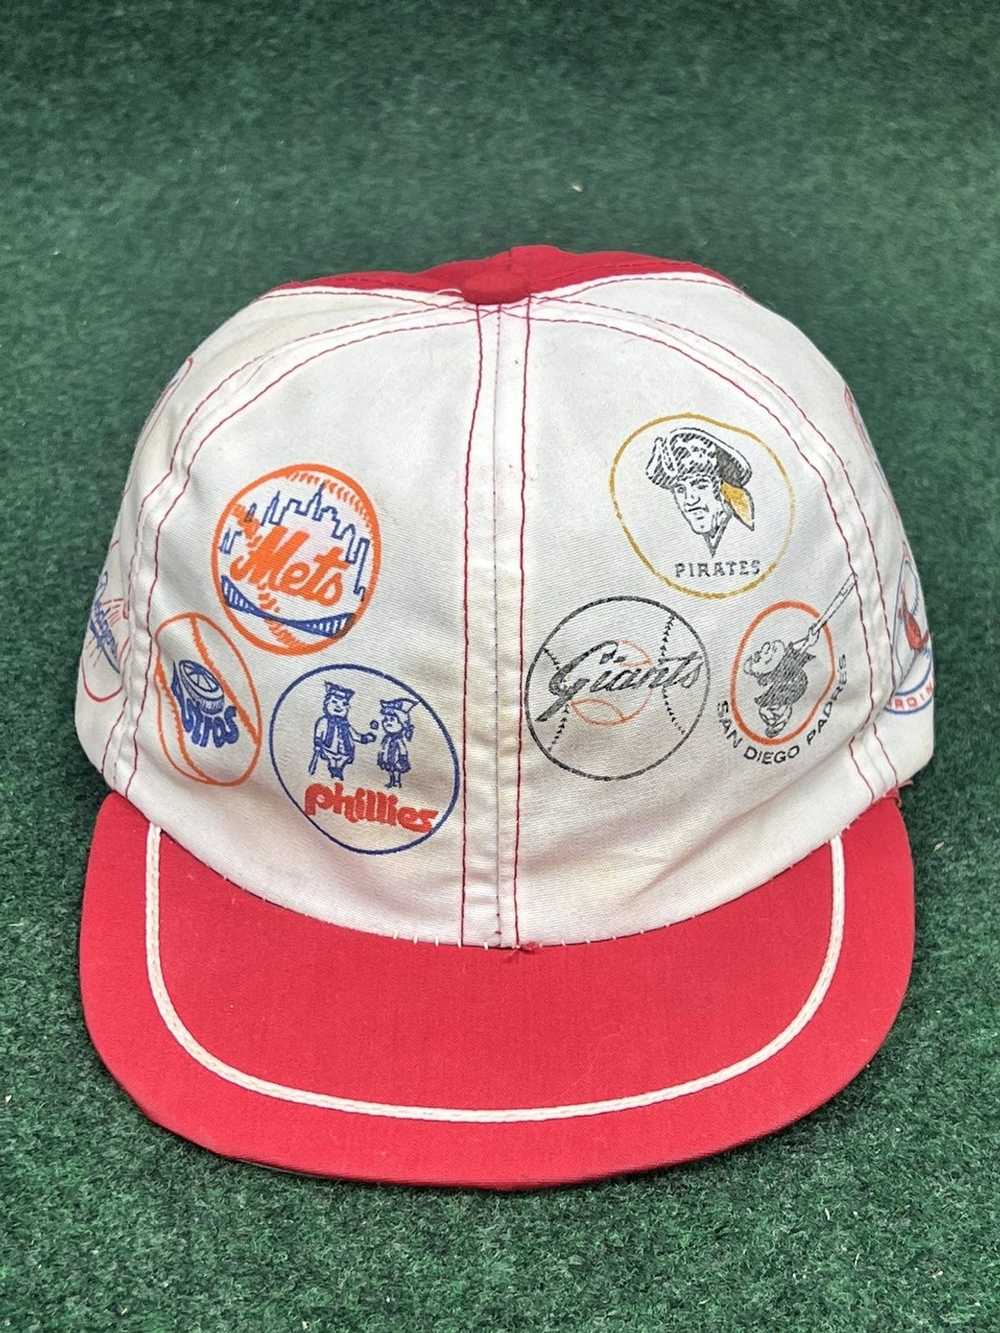  EXIGENT Chicago Baseball Retro 90's Baseball Jersey Christmas  Summer (as1, Alpha, m, Regular, Regular) White : Clothing, Shoes & Jewelry